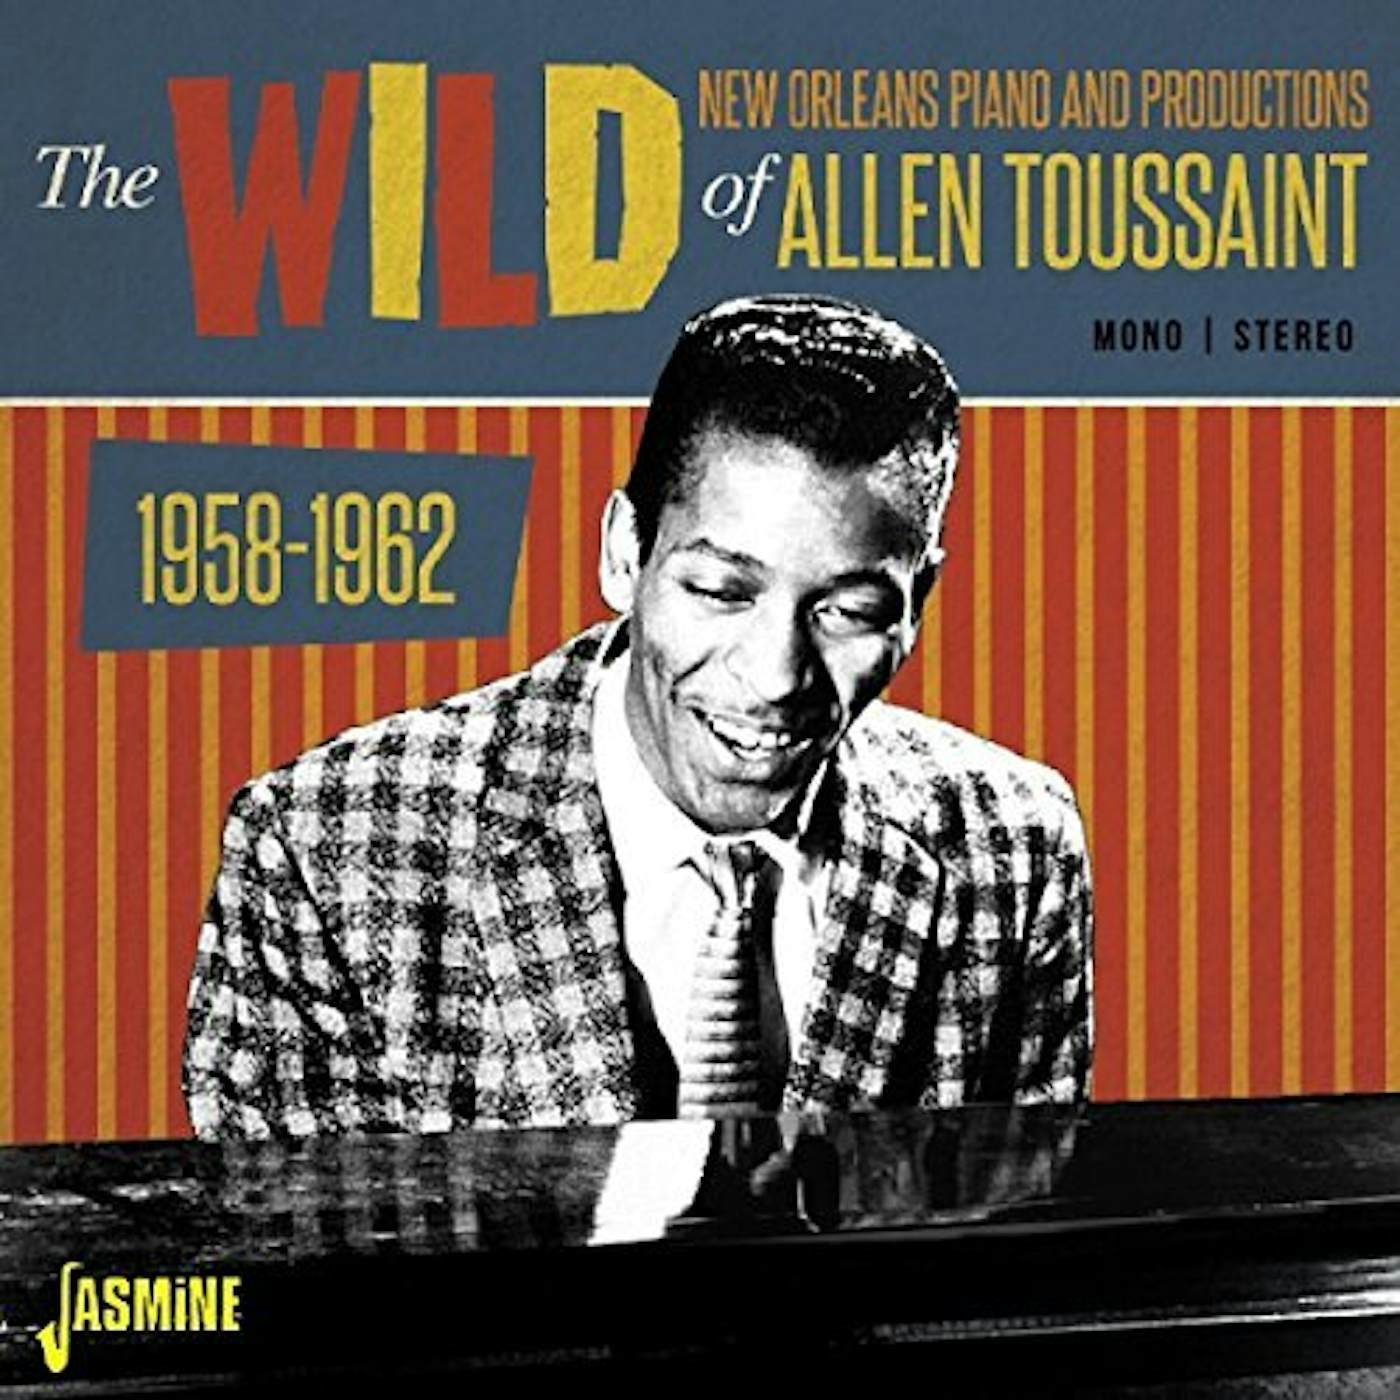 Allen Toussaint WILD NEW ORLEANS PIANO & PRODUCTIONS OF ALLEN CD